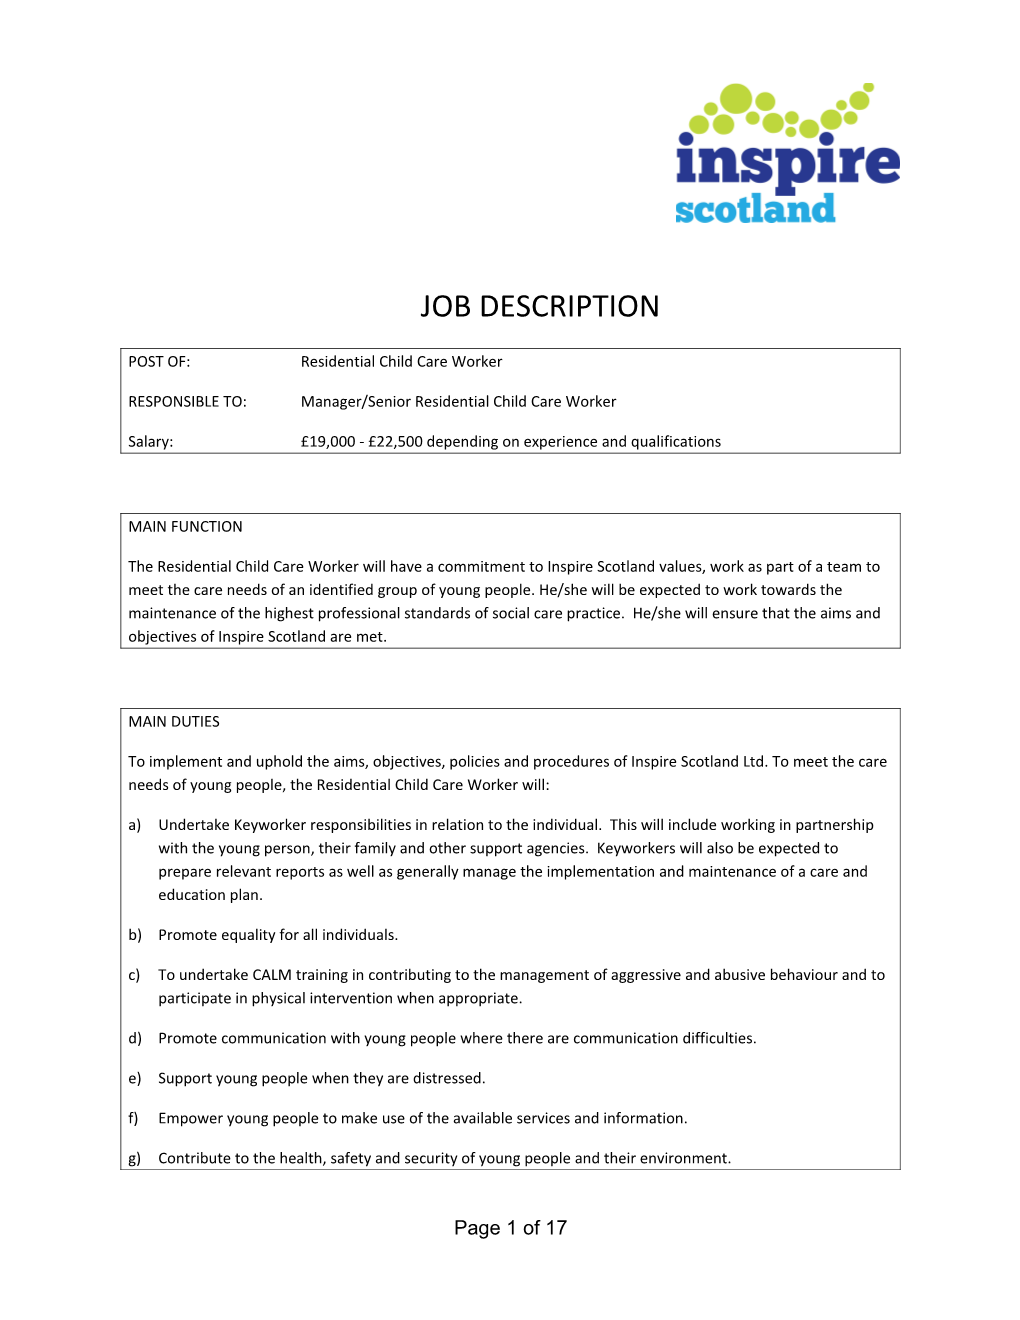 Employee Application Form